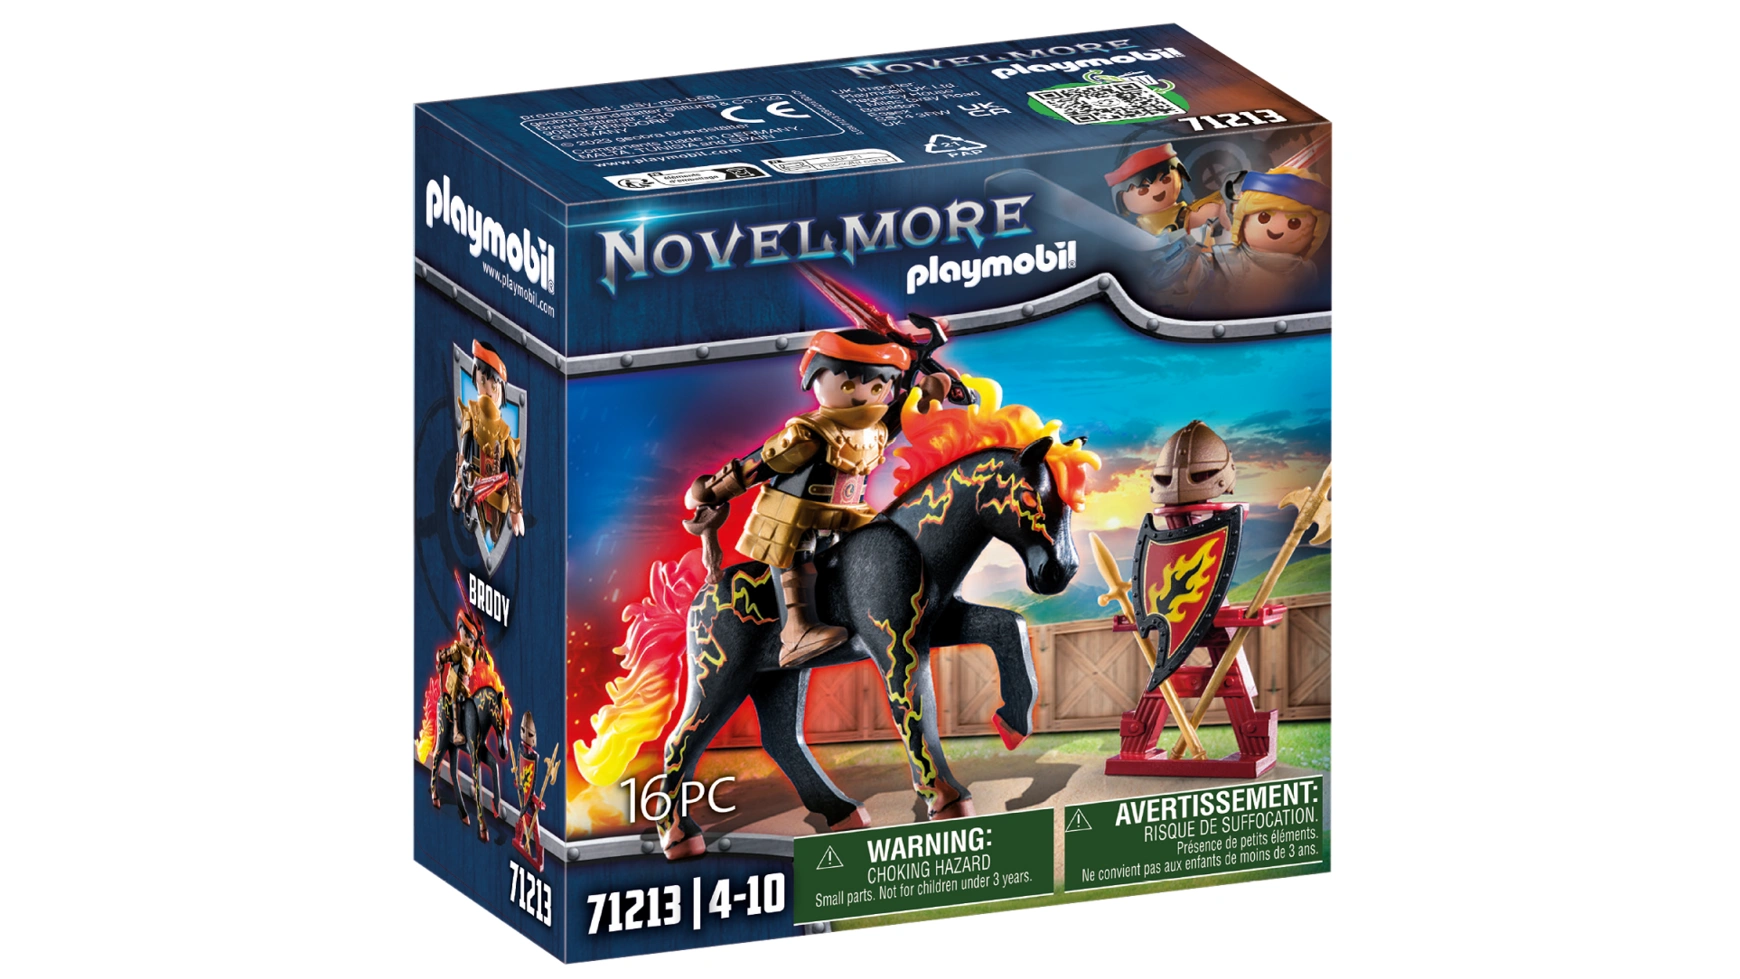 Novelmore burnham raiders огненные рыцари Playmobil novelmore мои фигурки рыцари новелмора playmobil